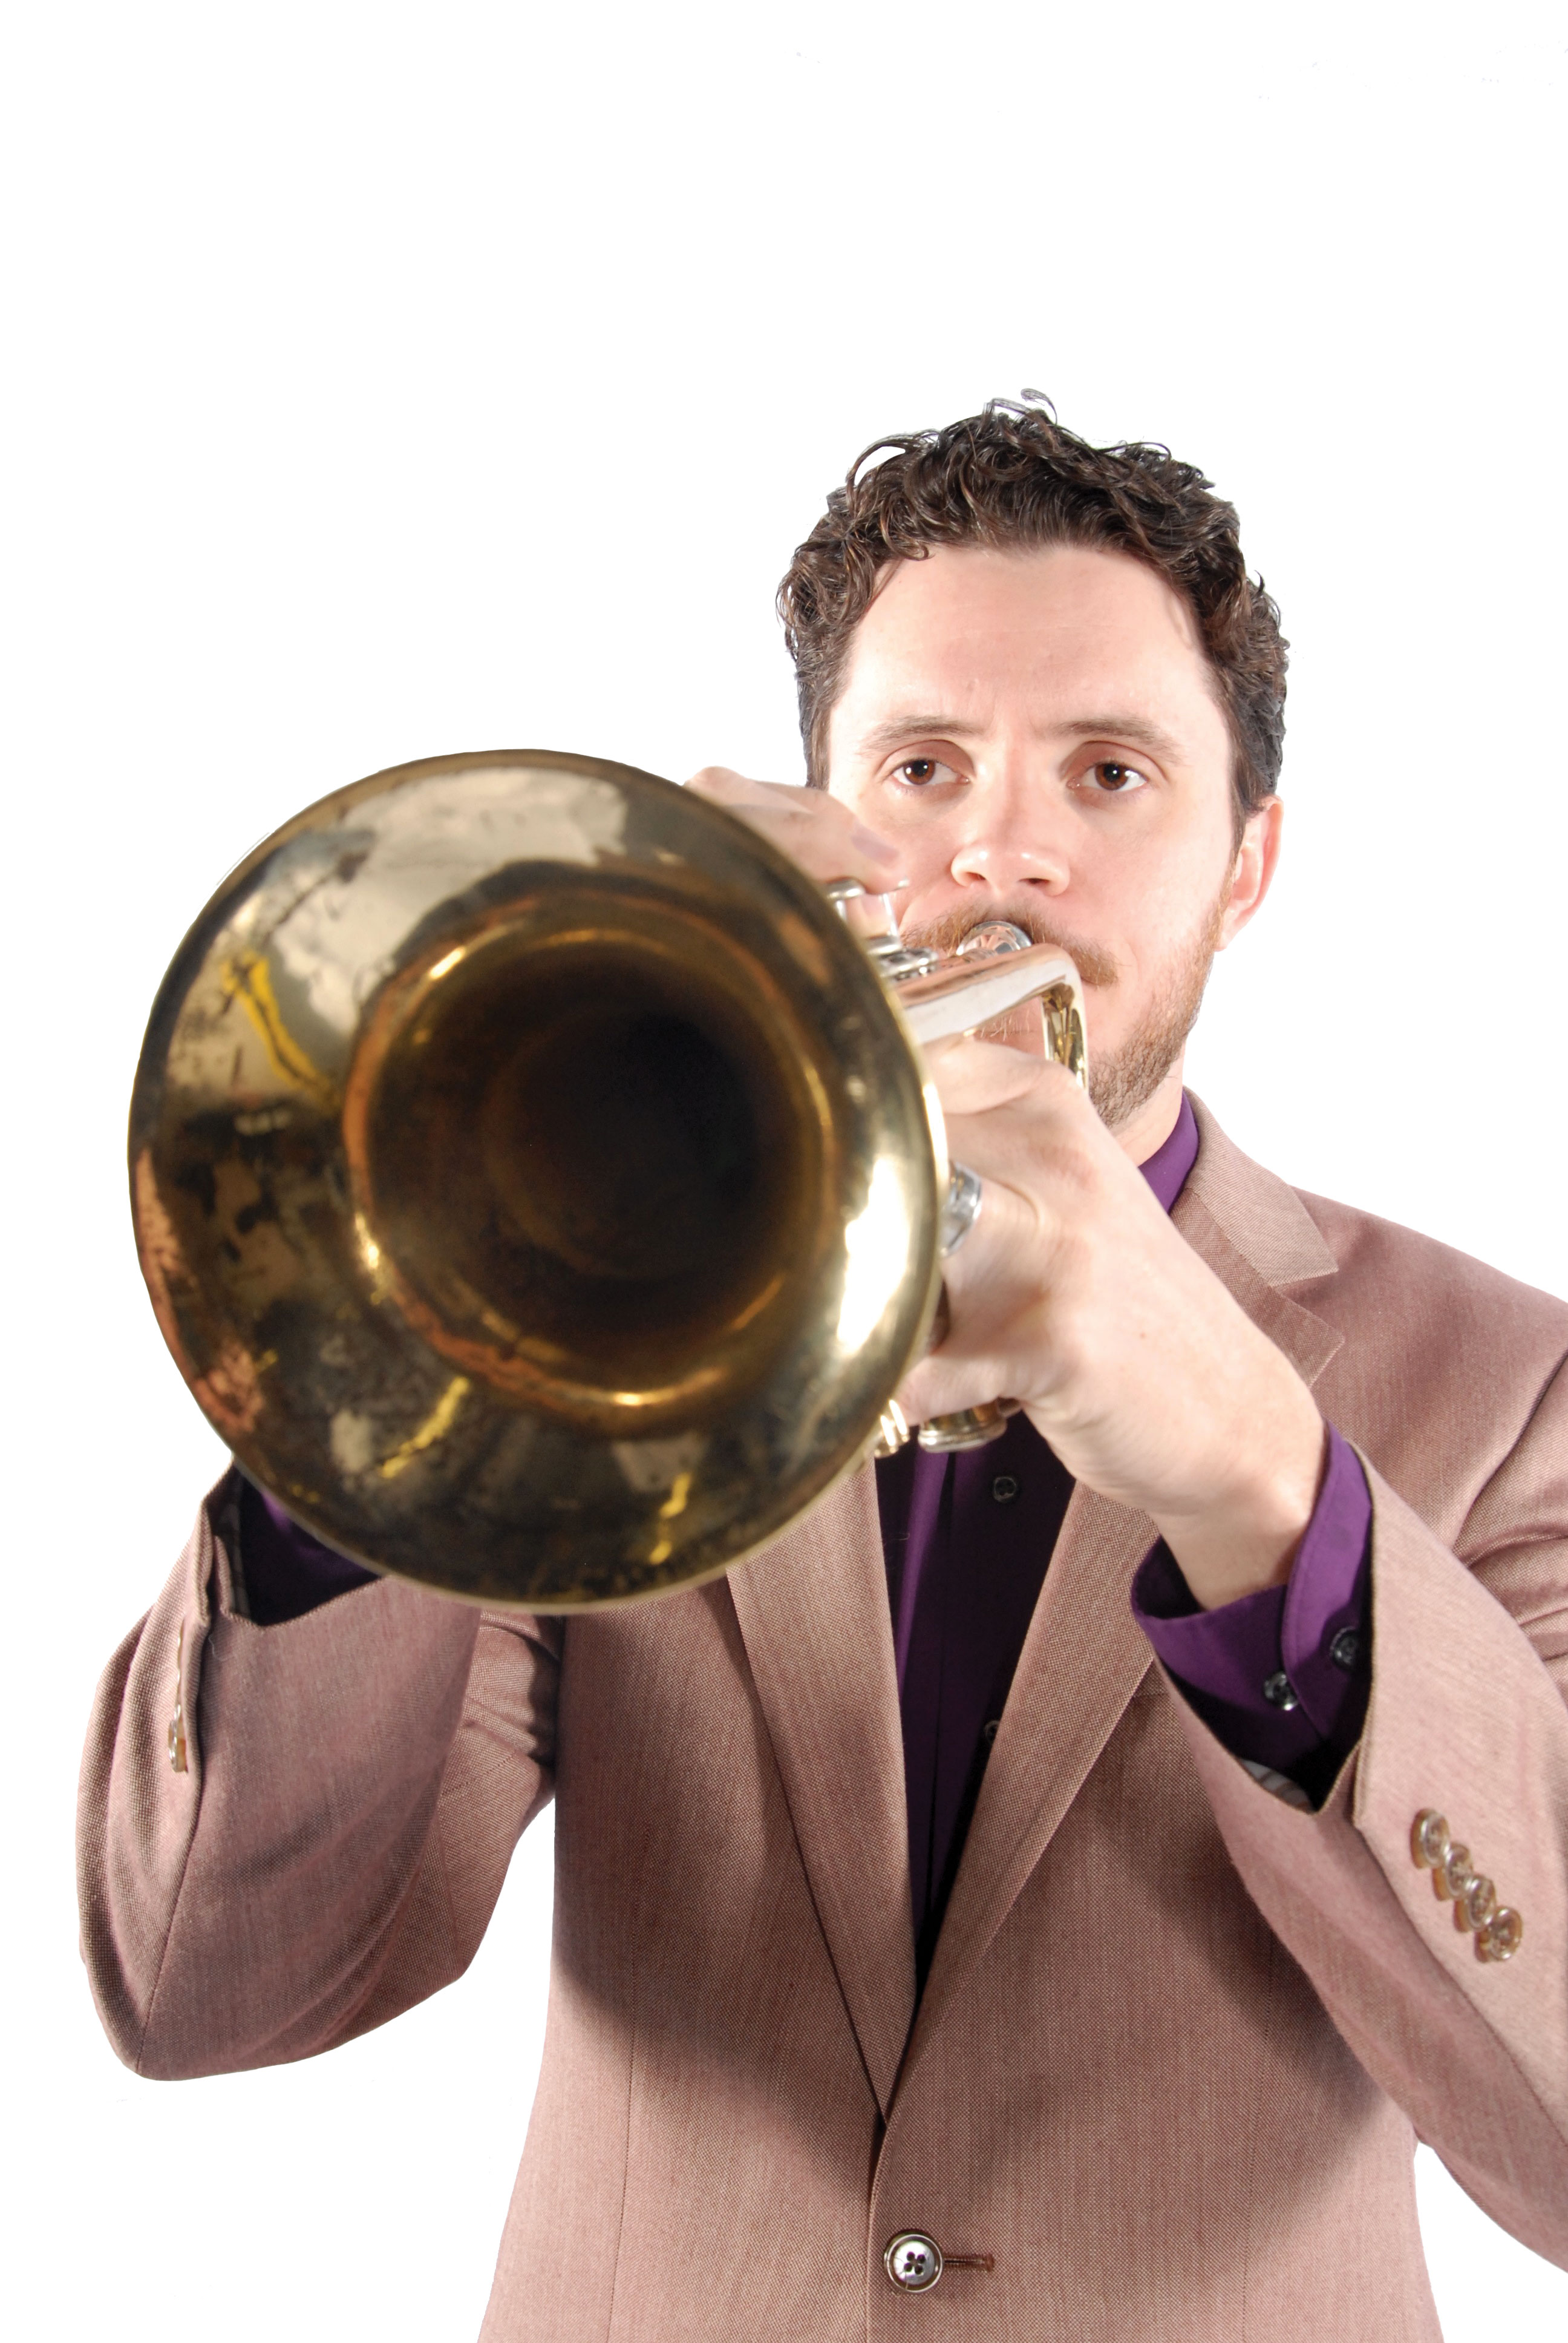 Trumpeter/composer Matt White.